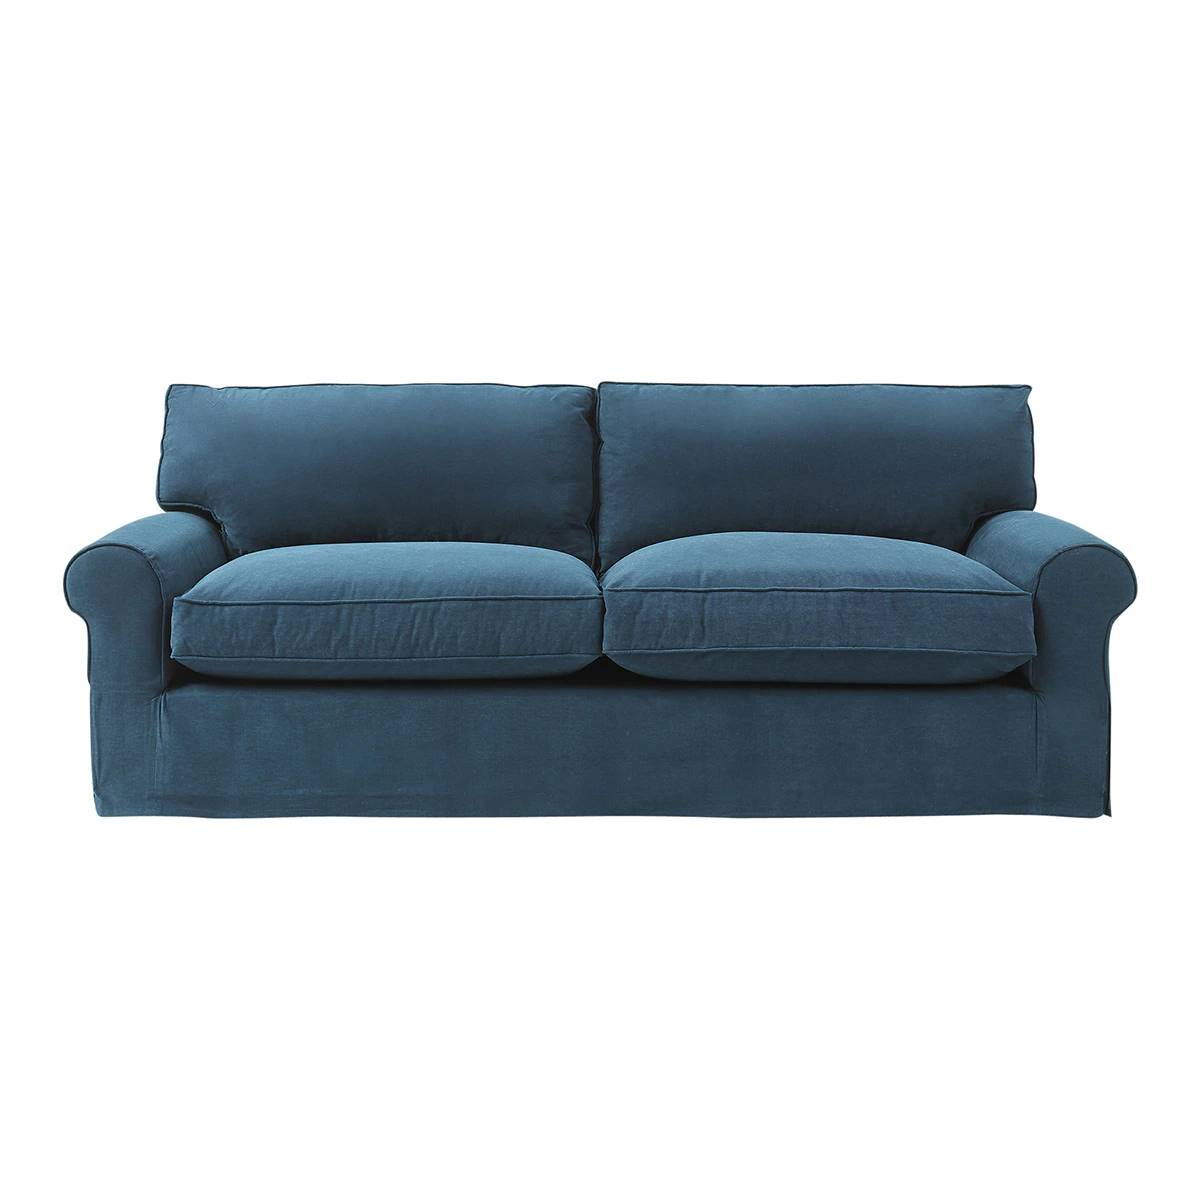 Sofá tapizado desenfundable de 3 plazas en color azul modelo Noa de El Corte Inglés